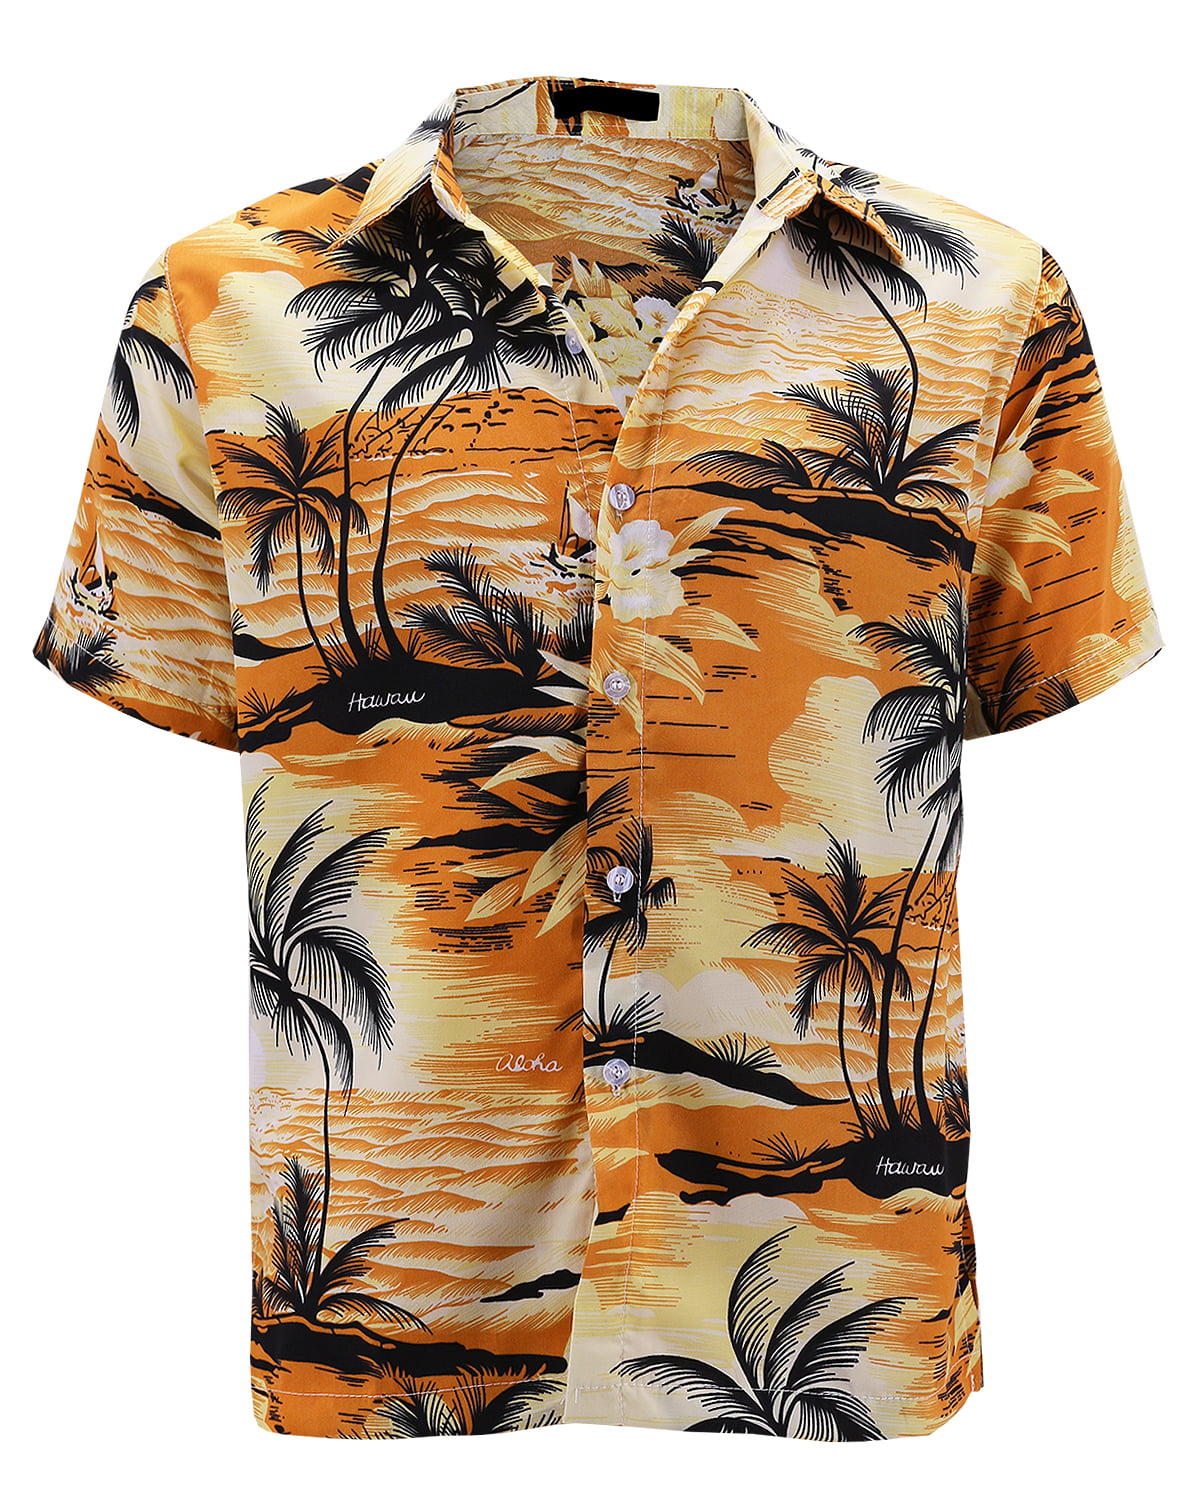 VKWEAR - Men's Hawaiian Tropical Luau Aloha Beach Party Button Up ...